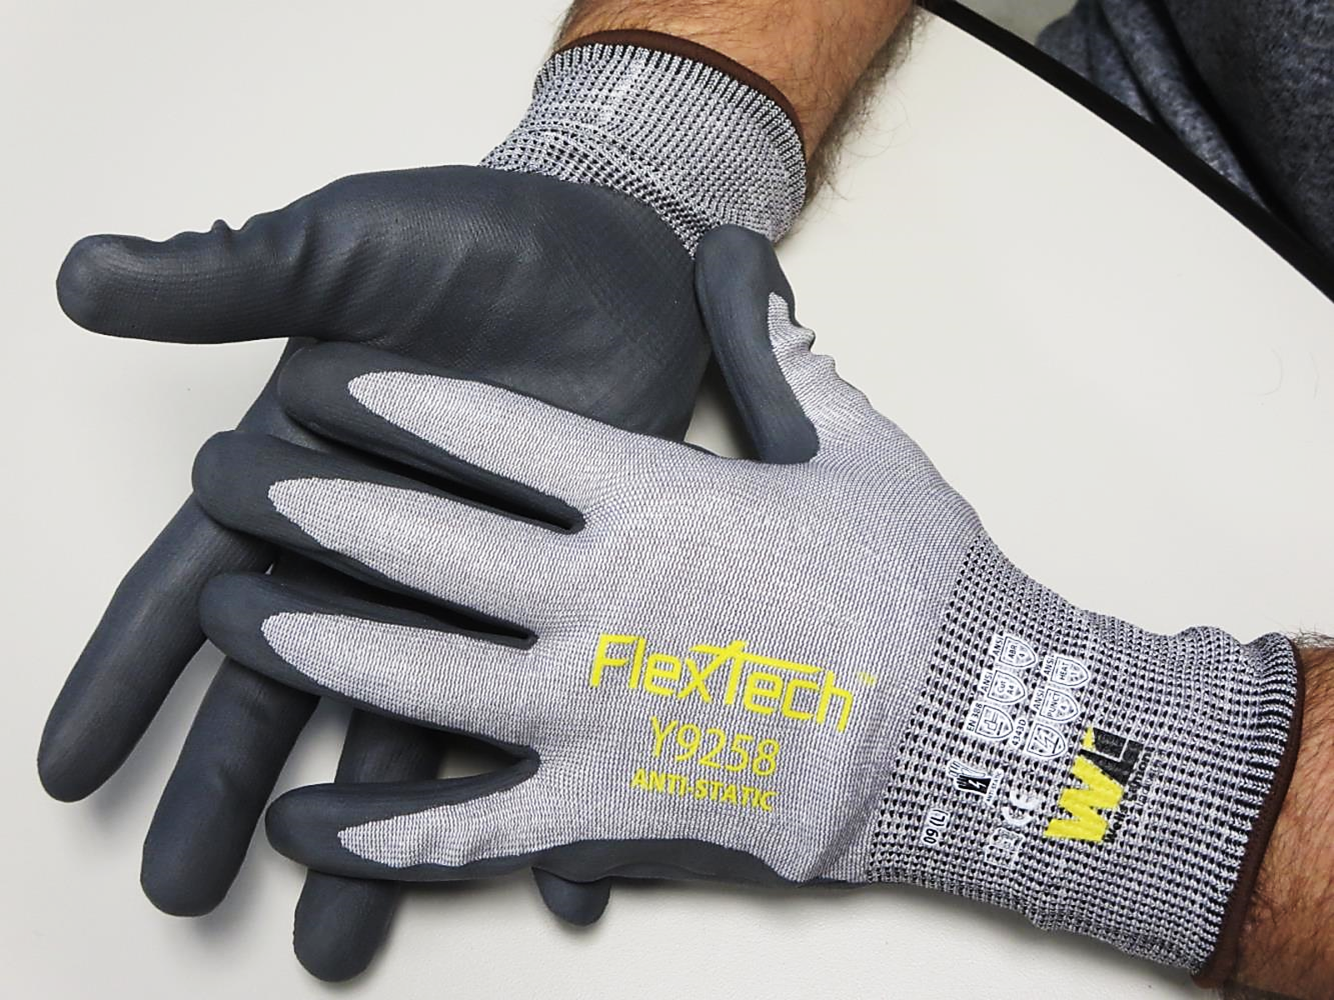 Y9258 Wells Lamont FlexTech Foam Nitrile Coated A4 ESD Safe 18-gauge Seamless Knit Work Gloves